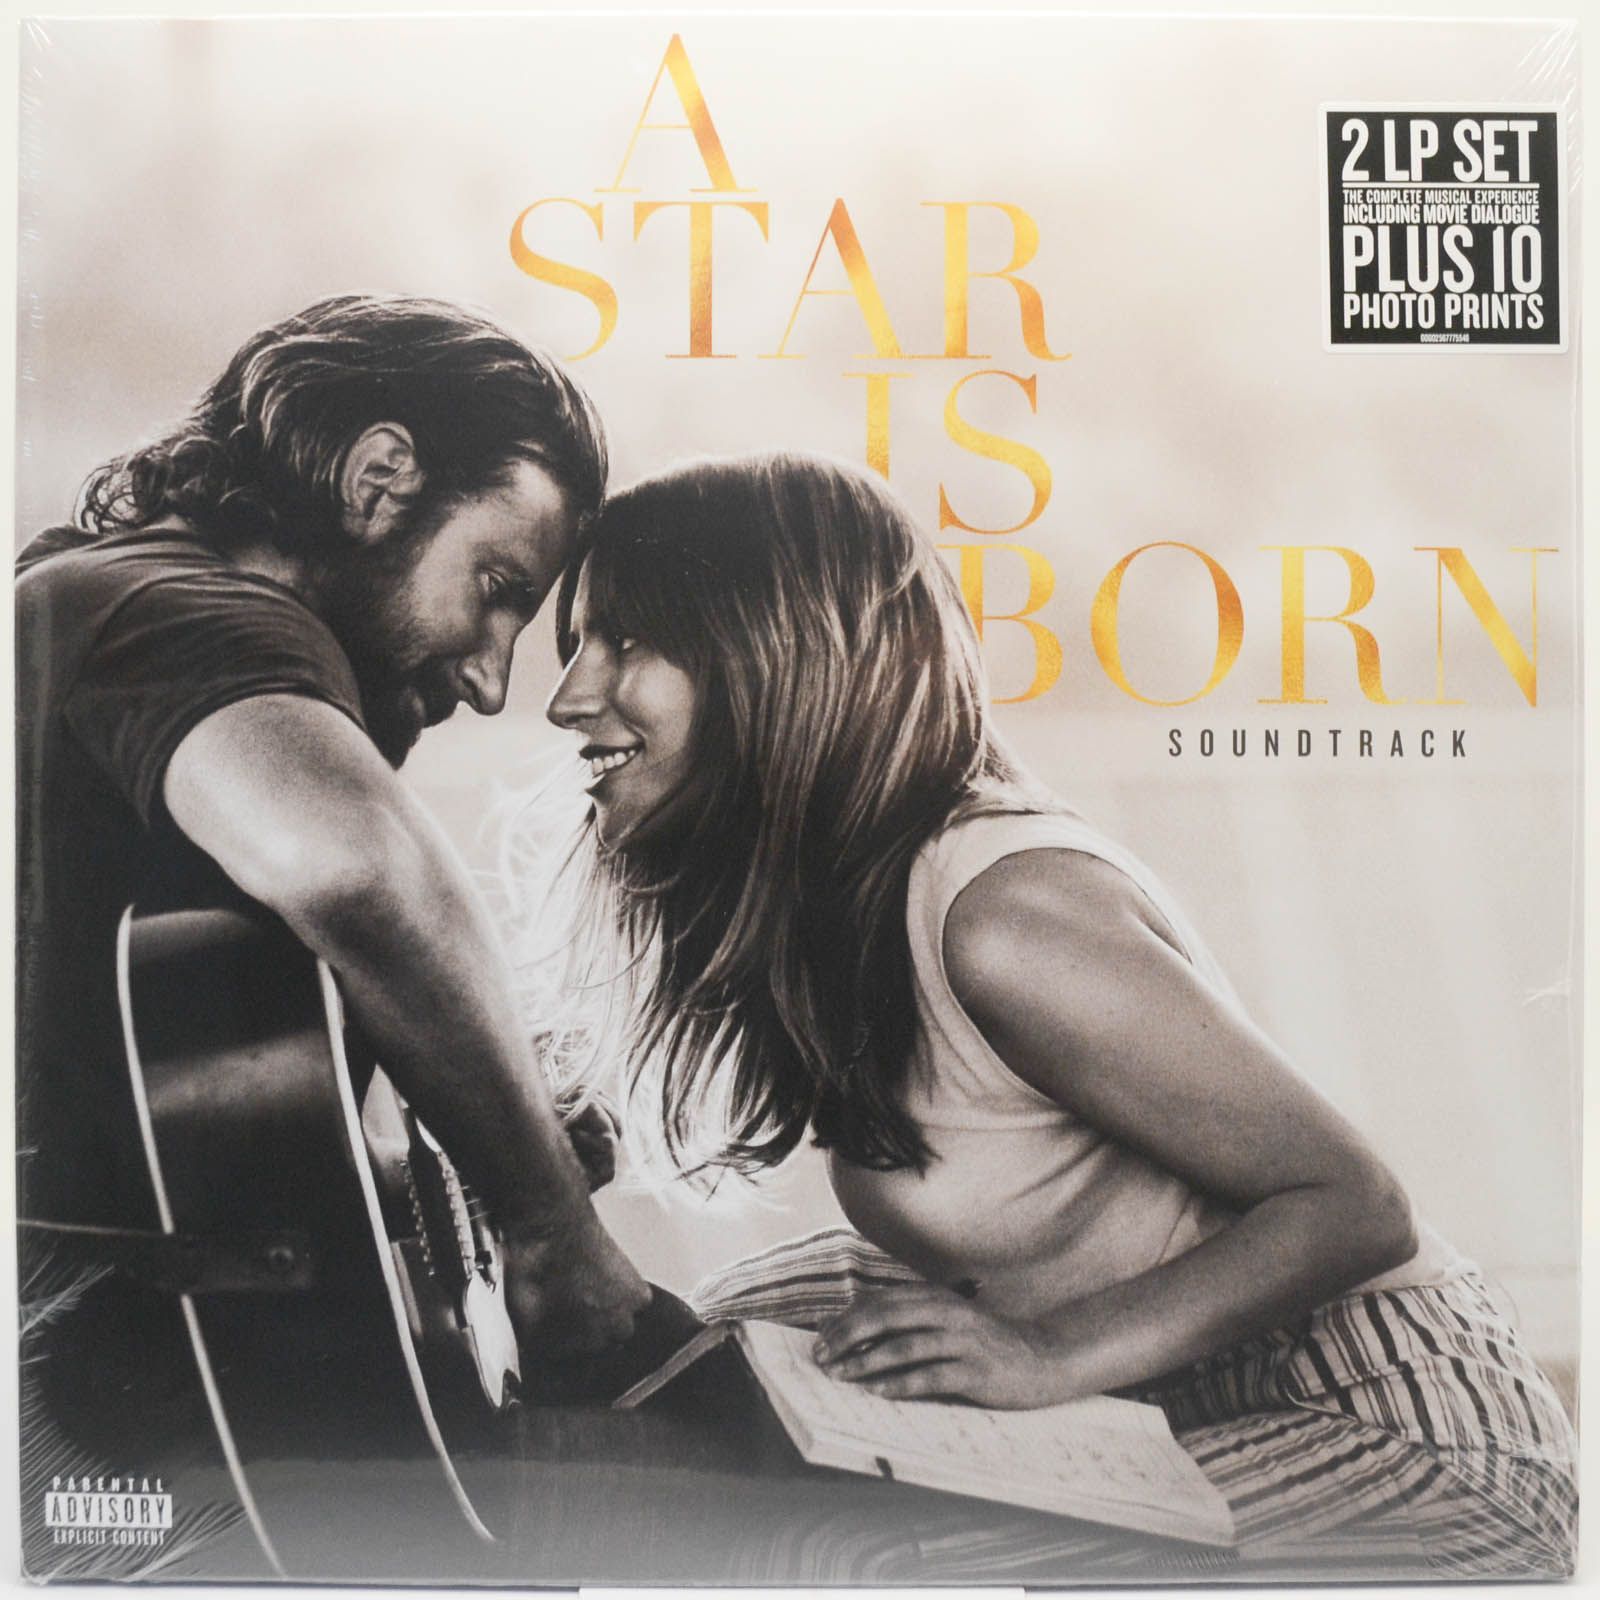 Lady Gaga Bradley Cooper A Star Is Born Soundtrack 2lp 6480 ₽ купить виниловую пластинку с